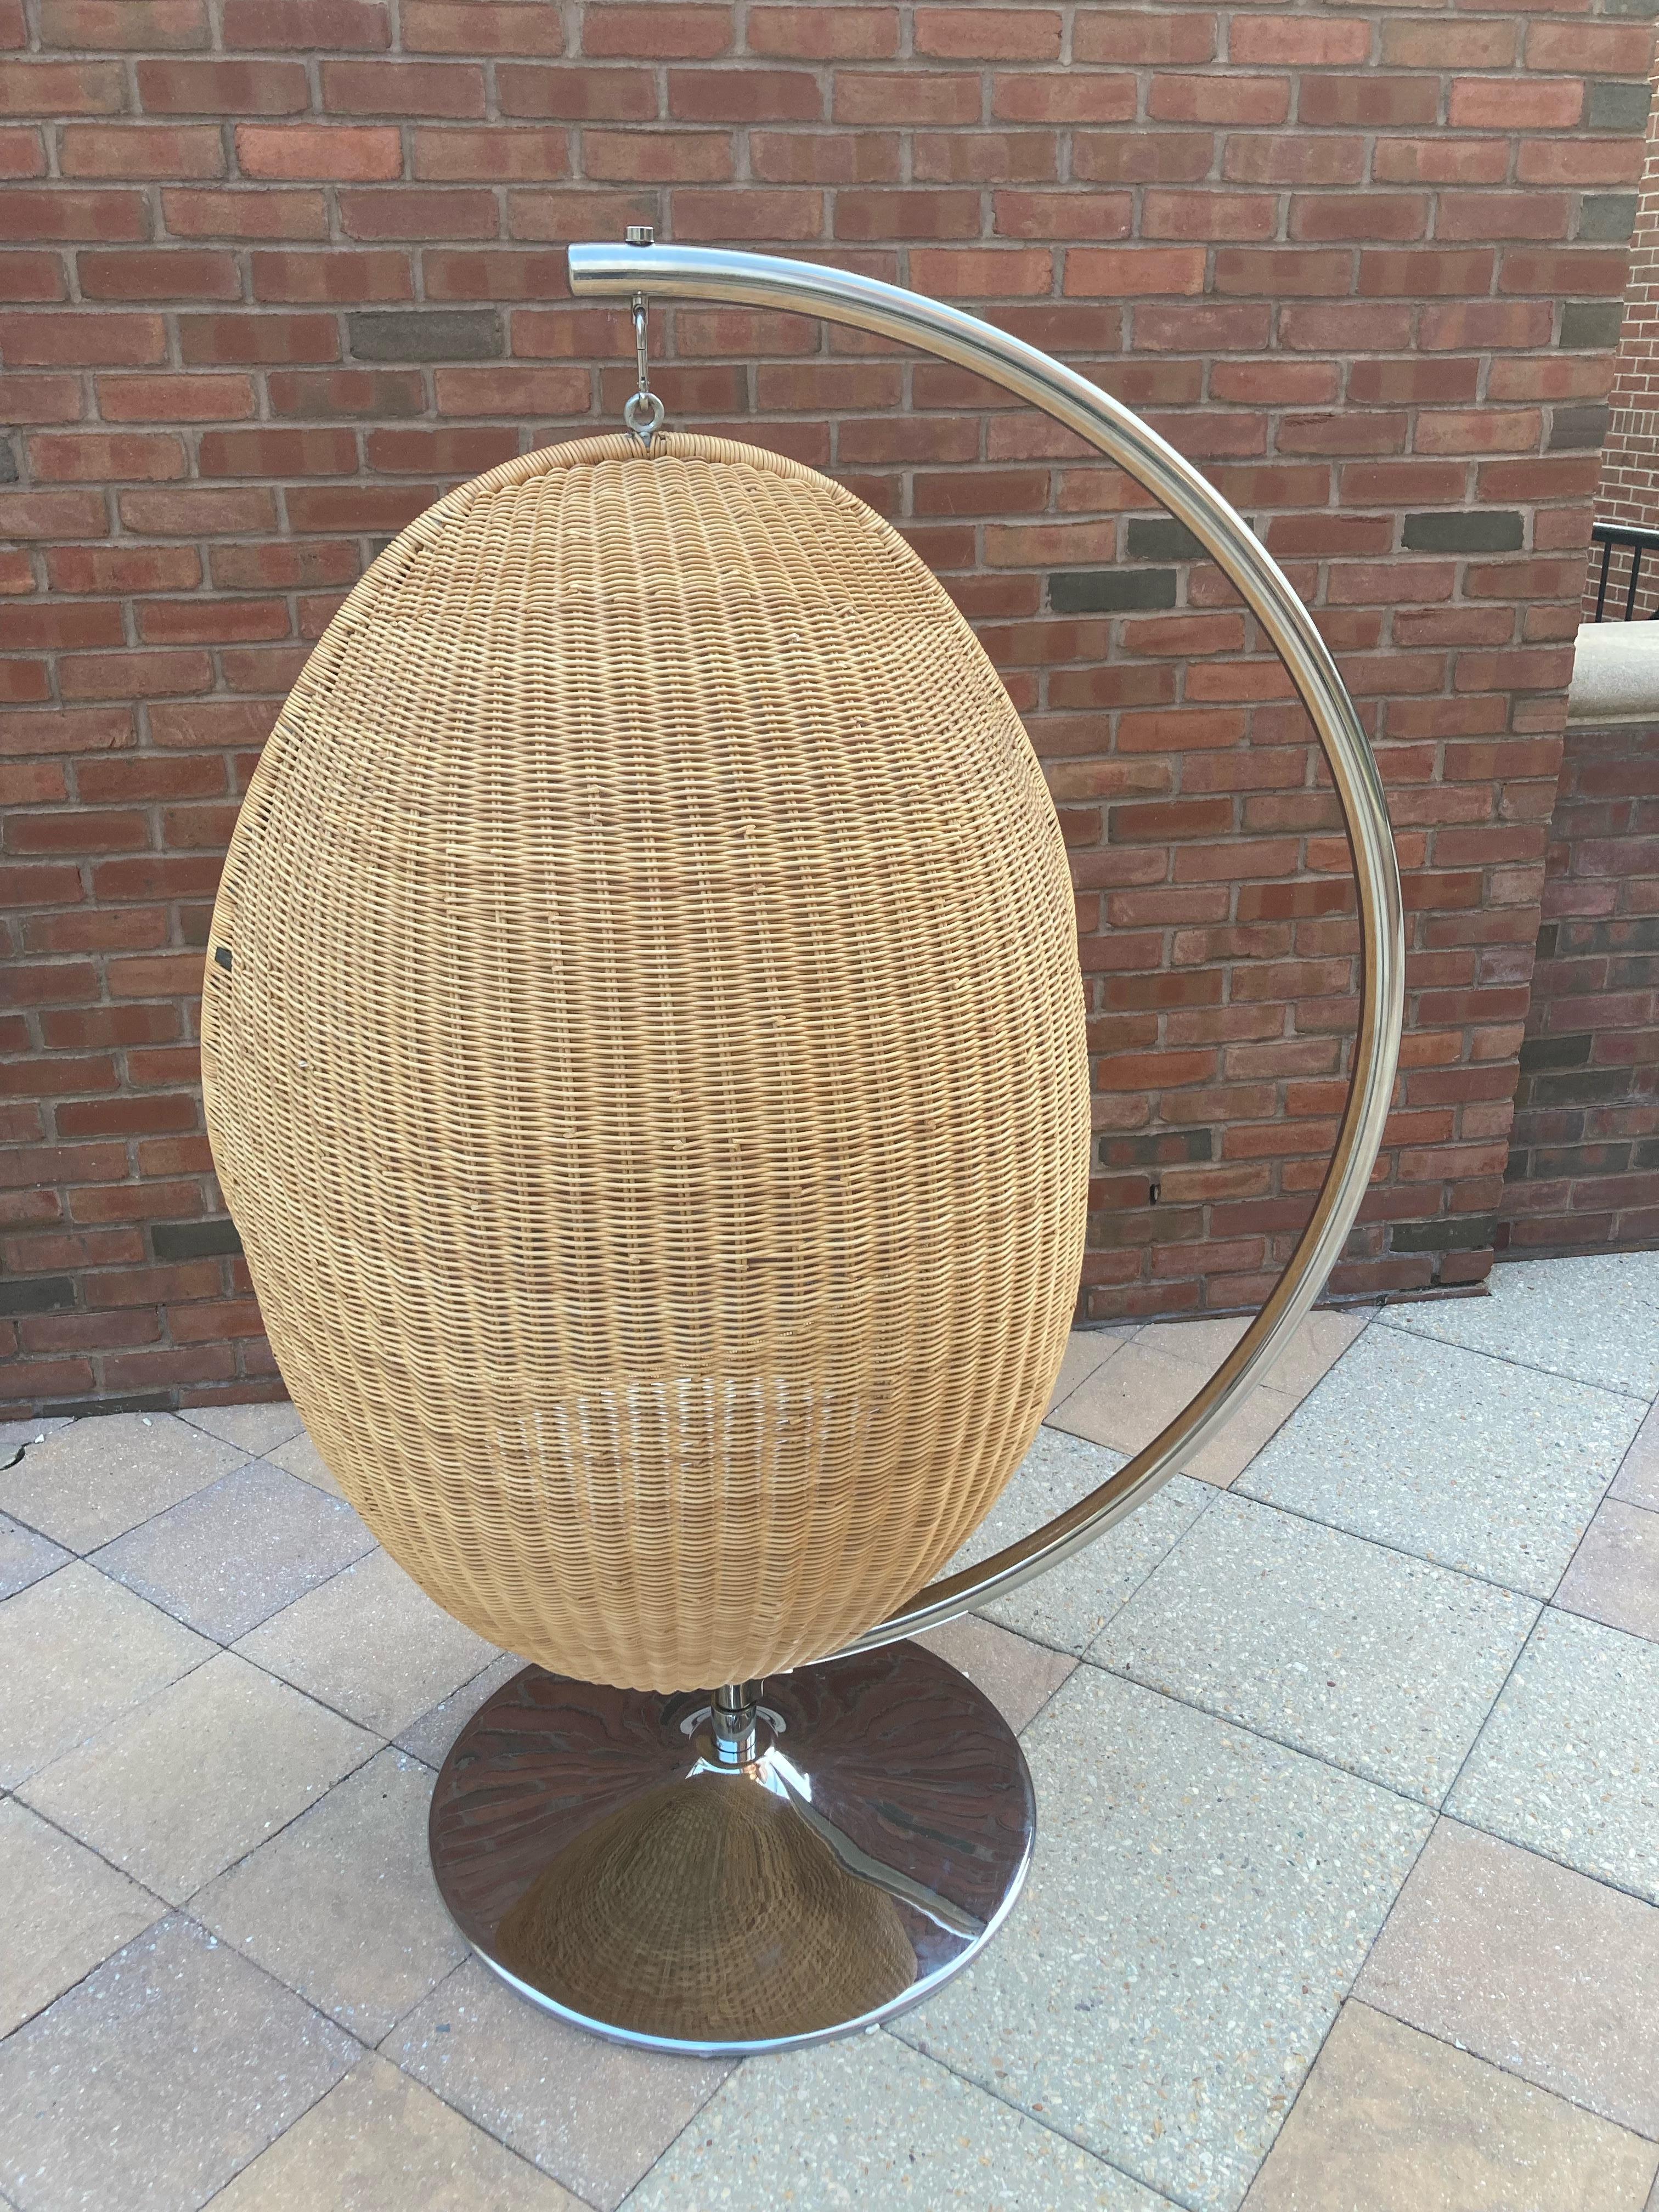 egg-shaped chair -china -b2b -forum -blog -wikipedia -.cn -.gov -alibaba